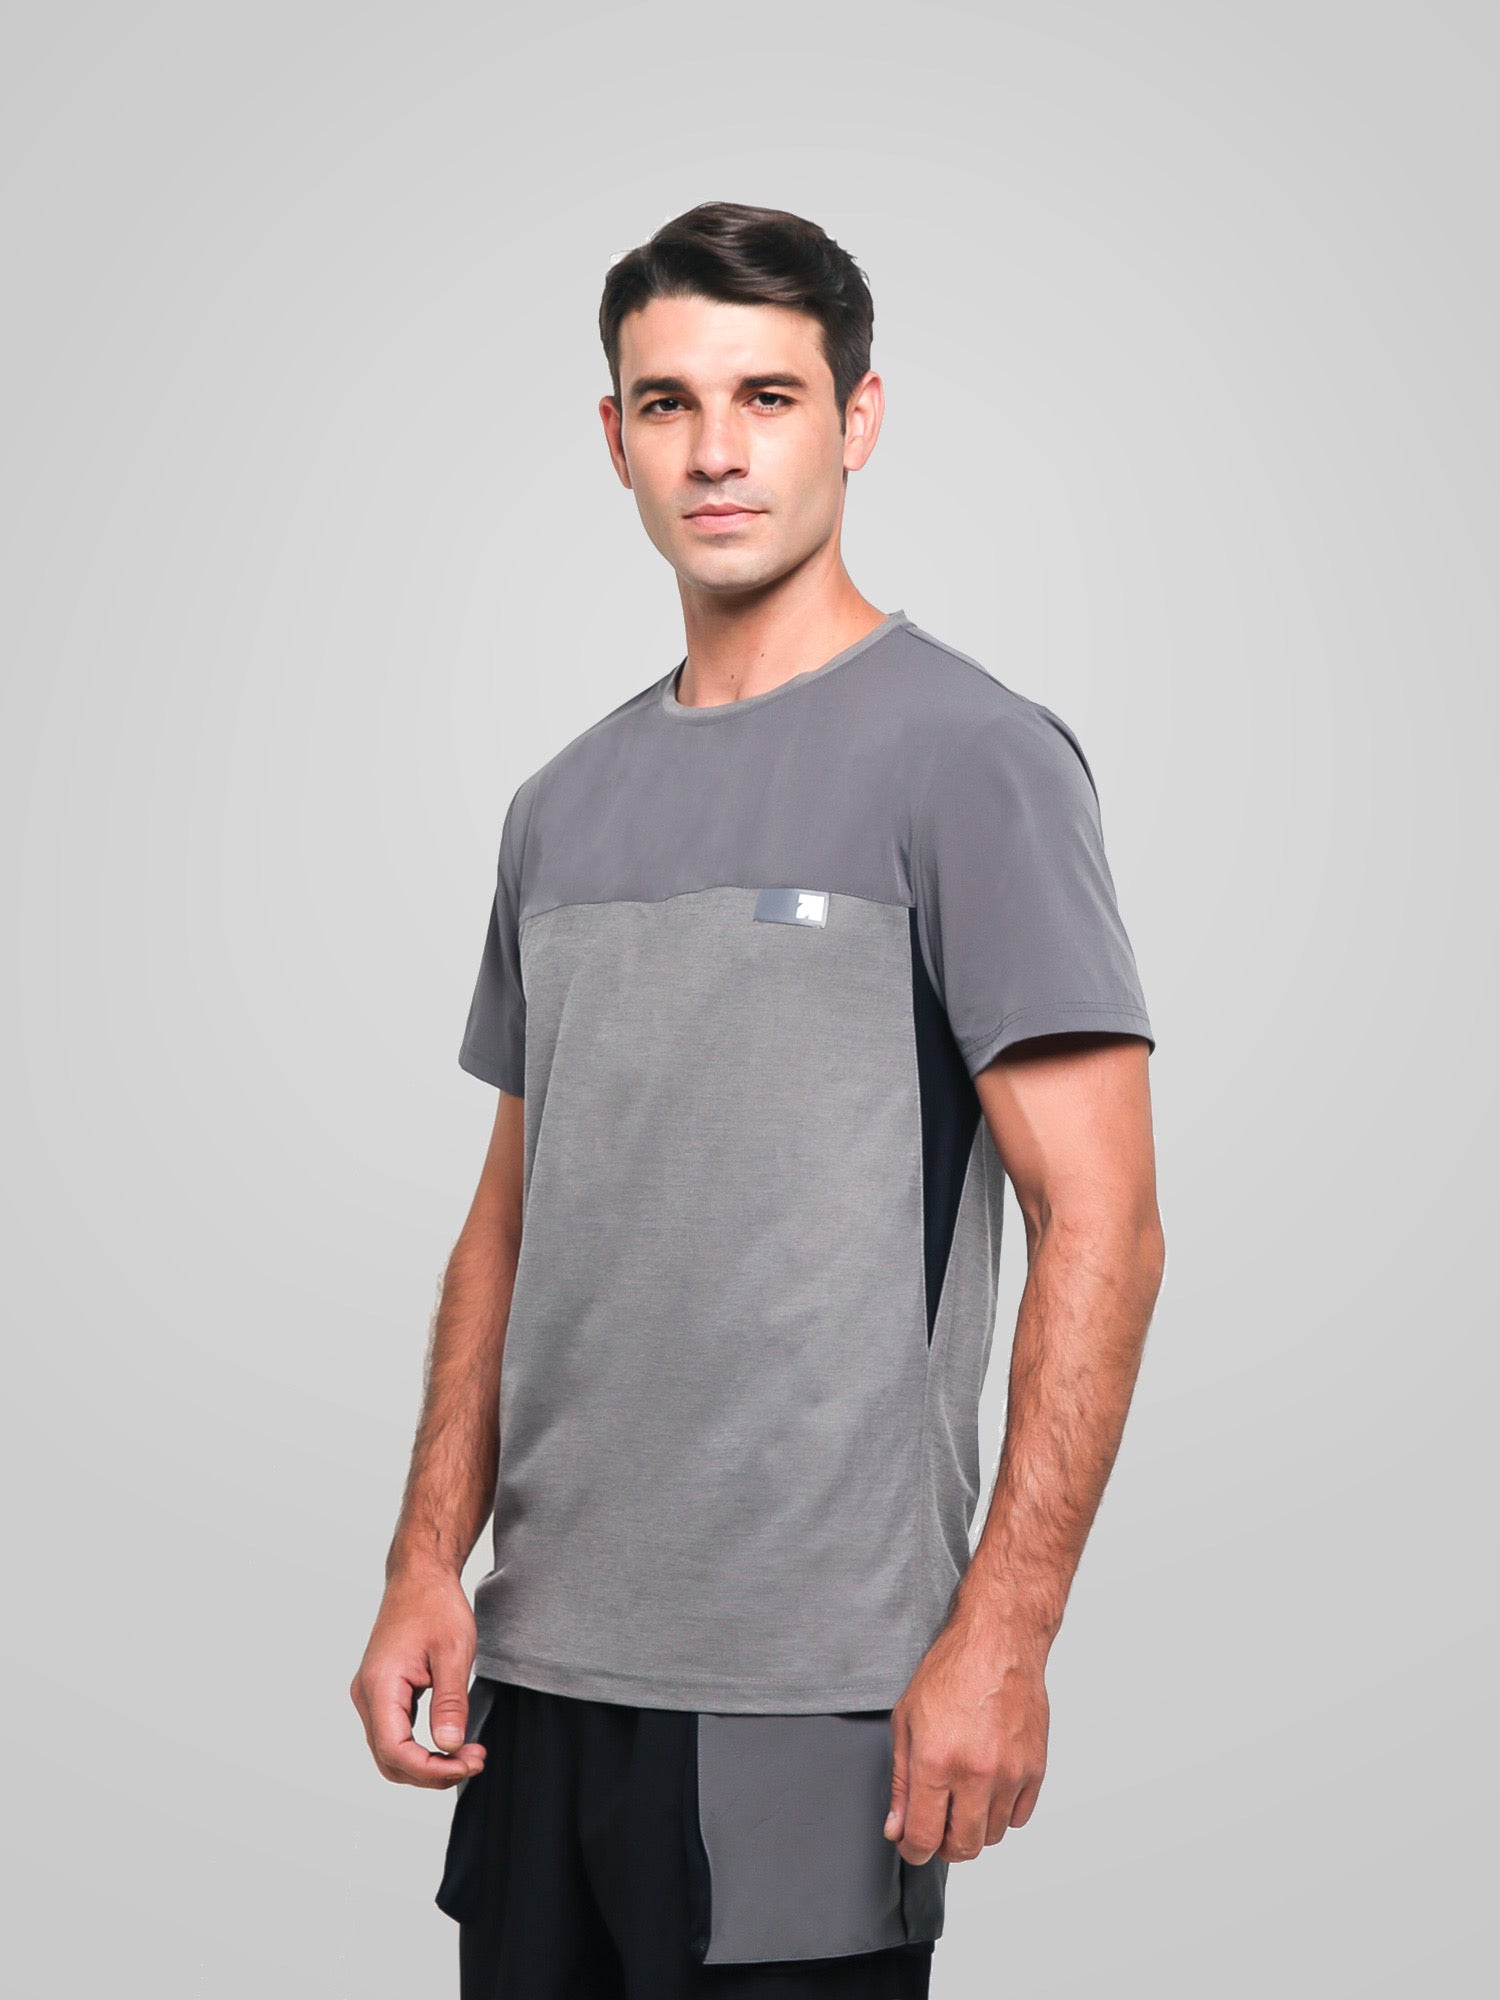 Unisex Ultimate Utilitarian Grey Male T-shirt